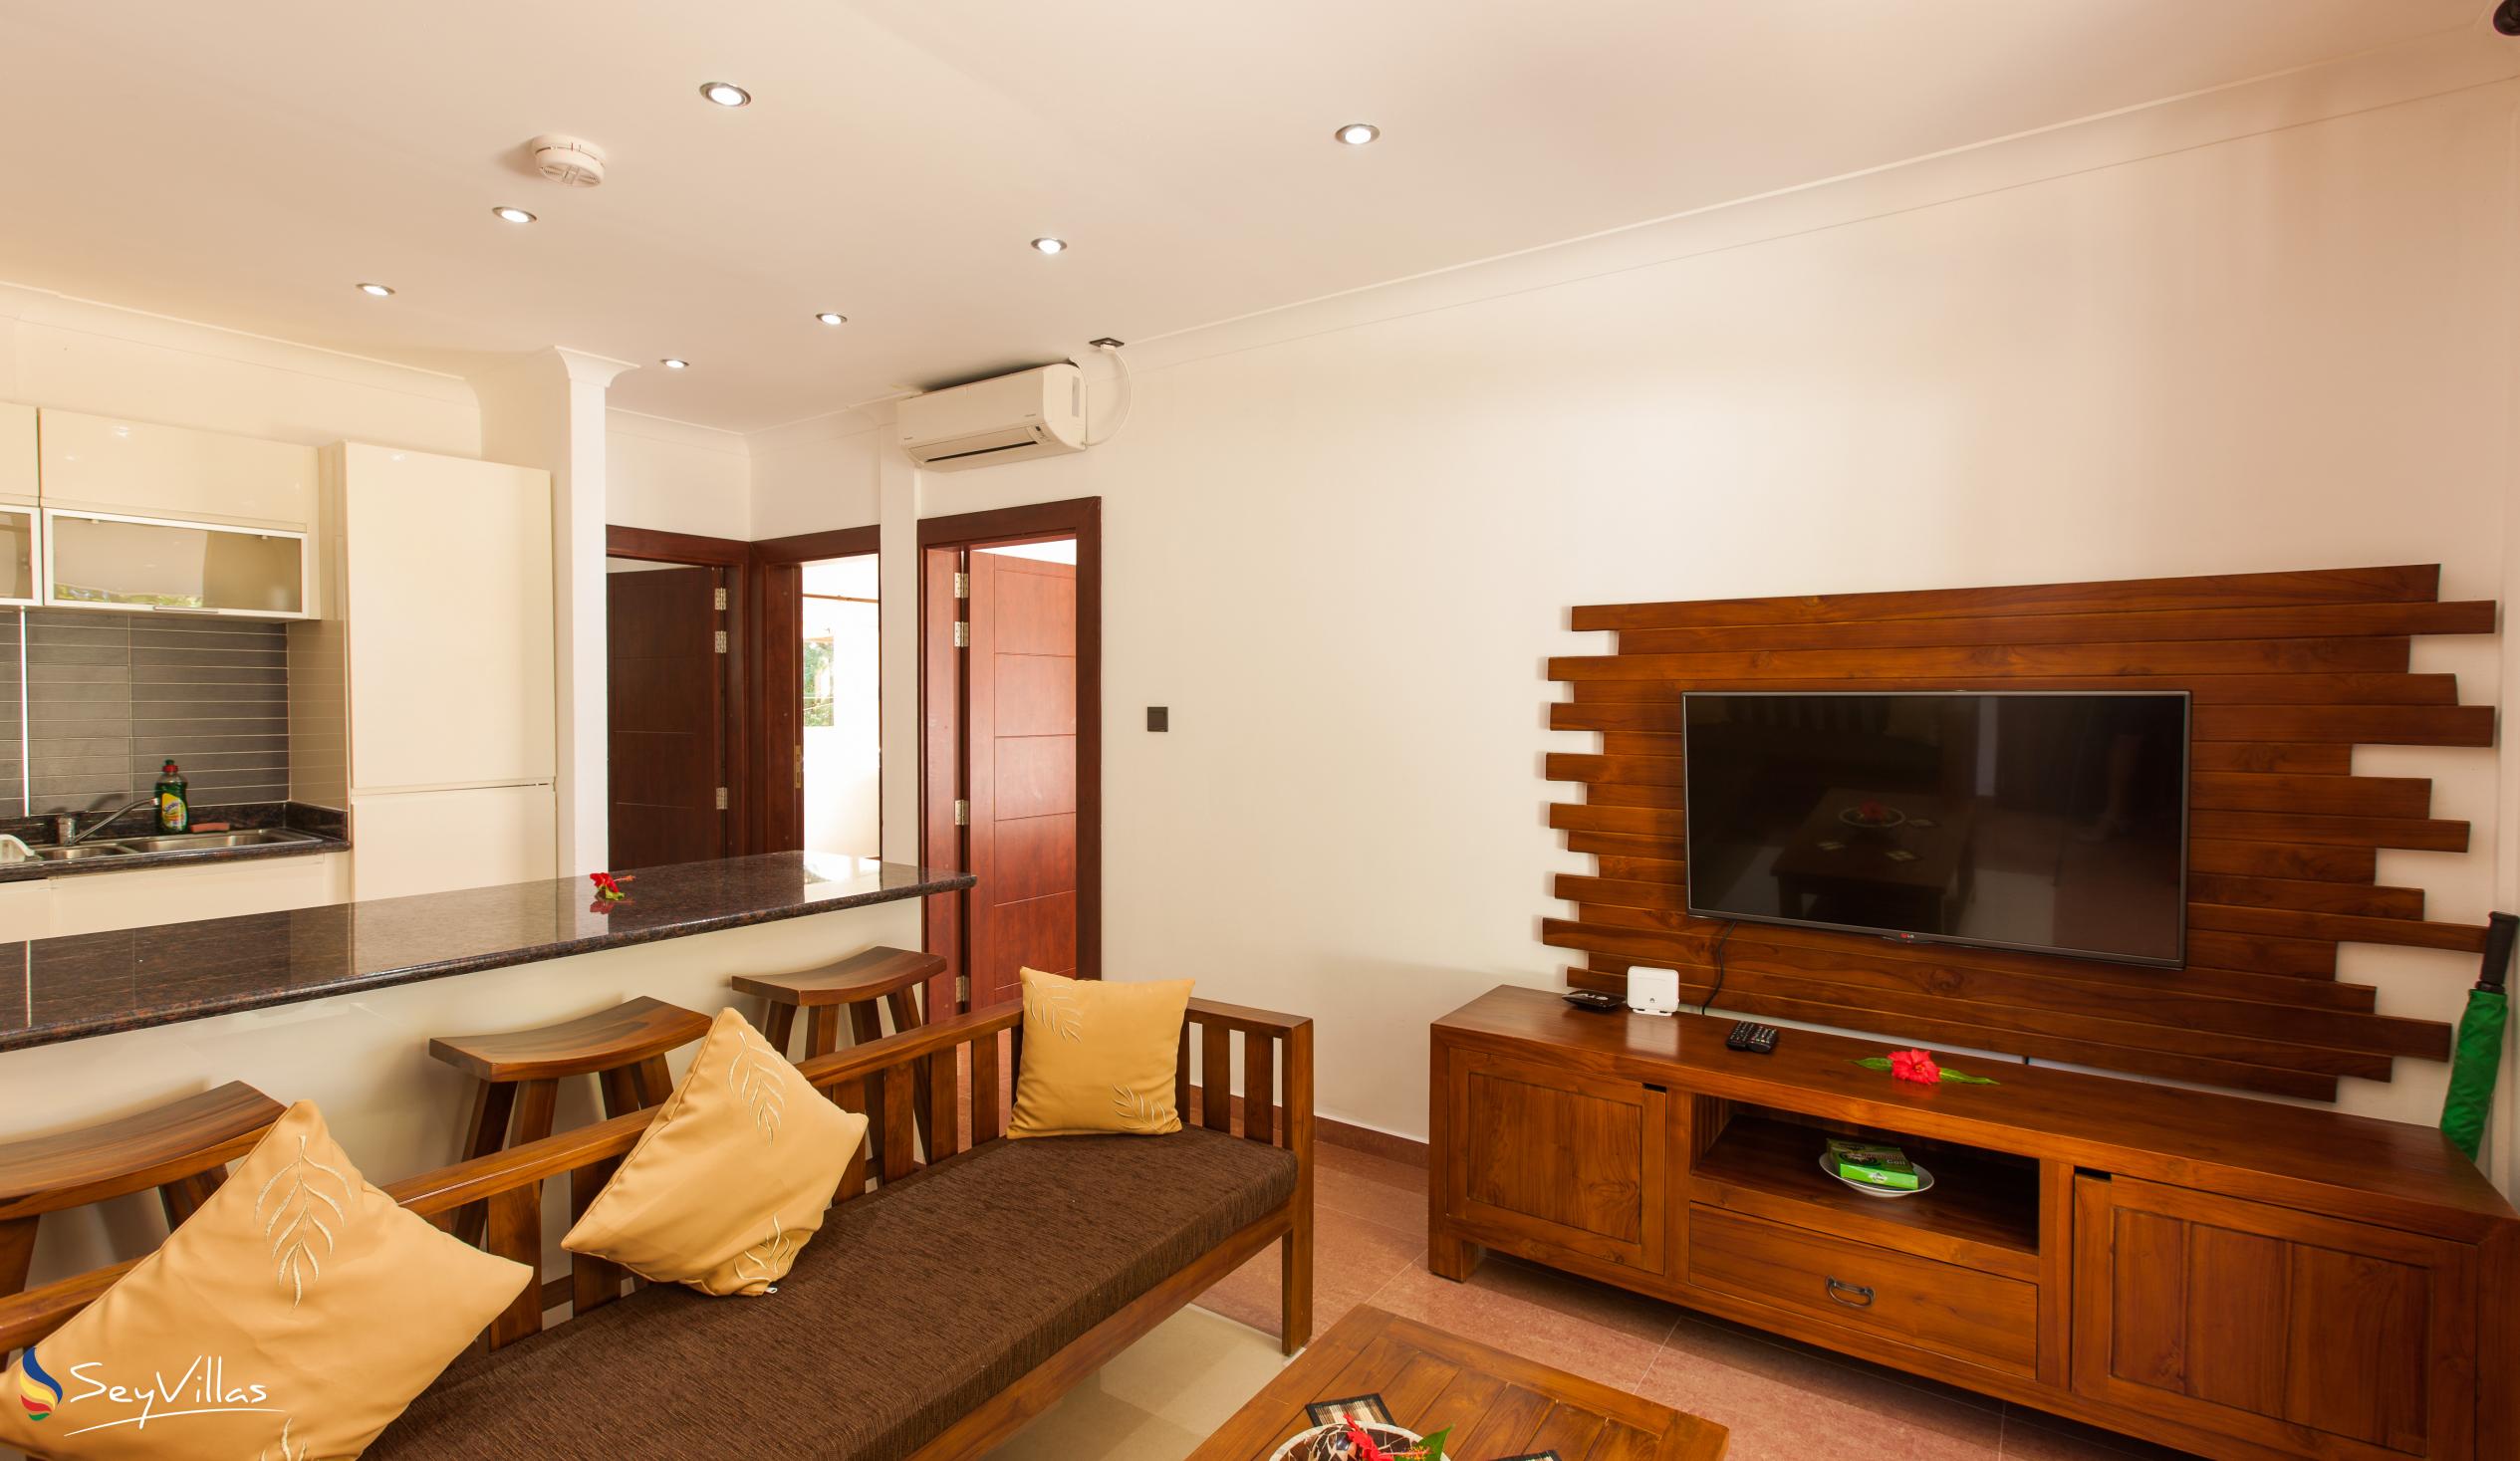 Photo 52: YASAD Luxury Beach Residence - 2-Bedroom Apartment - Praslin (Seychelles)